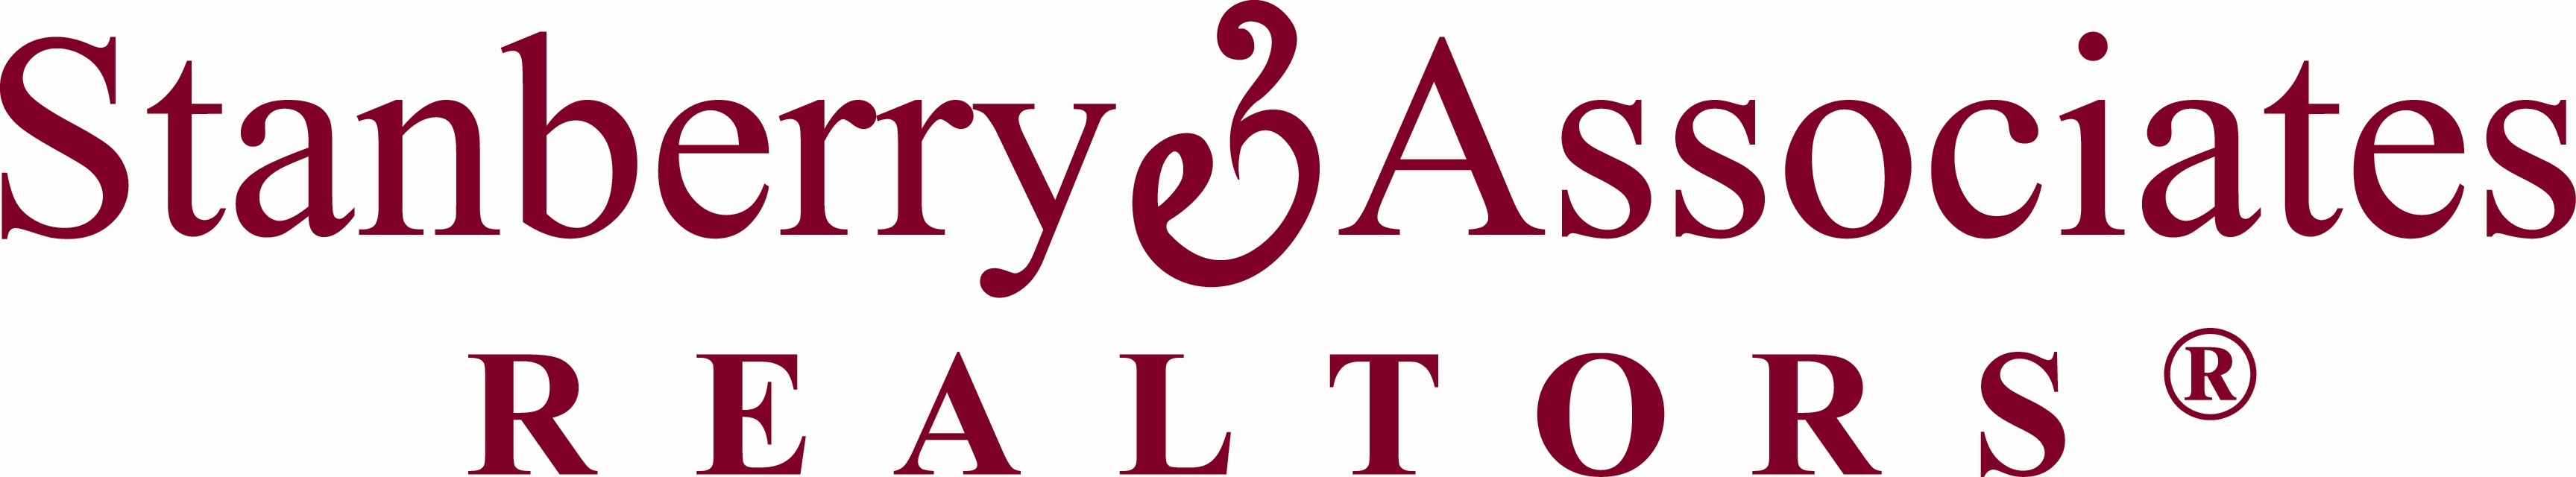 Stanberry & Associates, Inc. logo